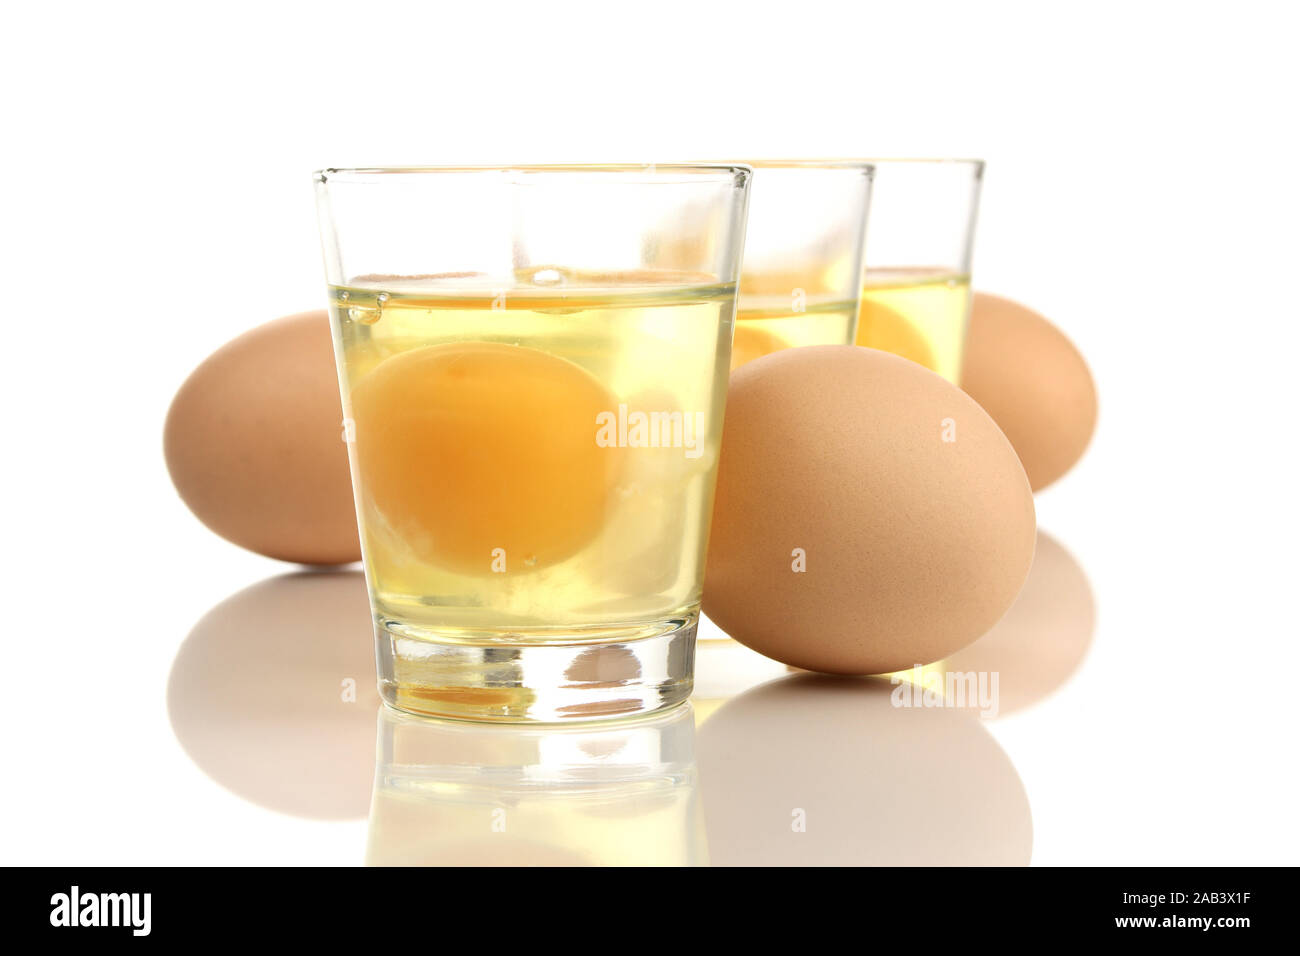 Rohe Eier im Glas |Raw eggs in glass| Stock Photo